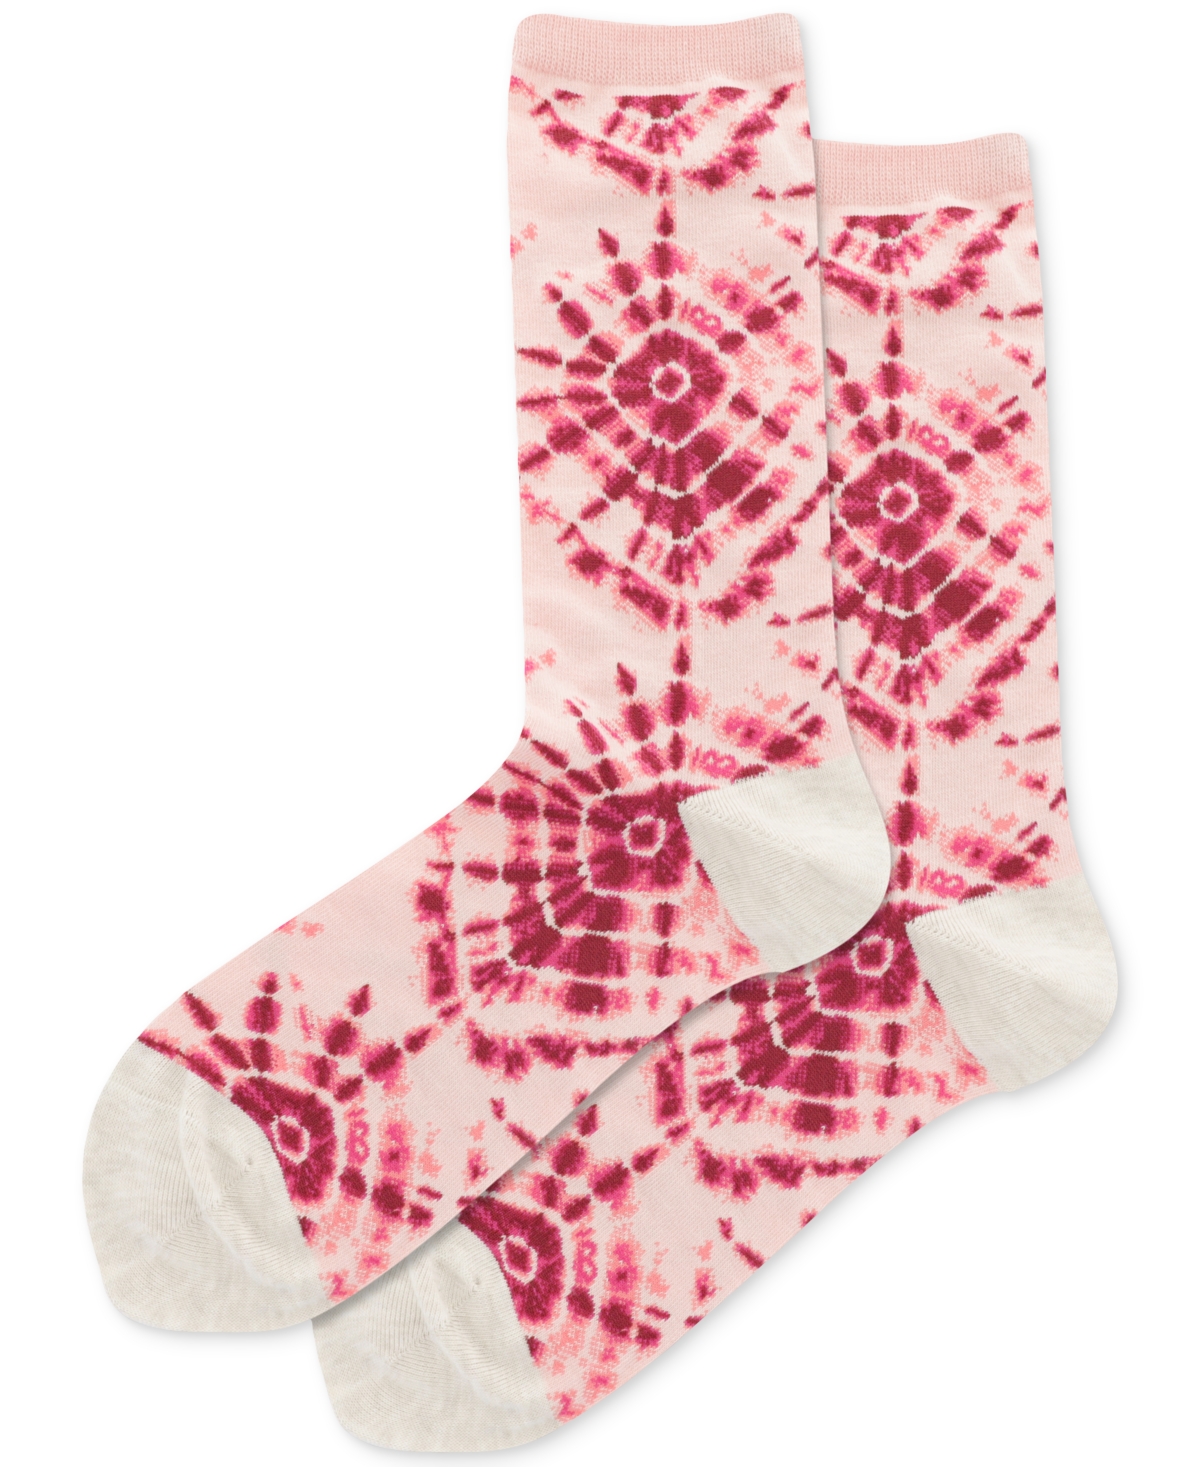 Women's Tie-Dye Crew Socks - Blush